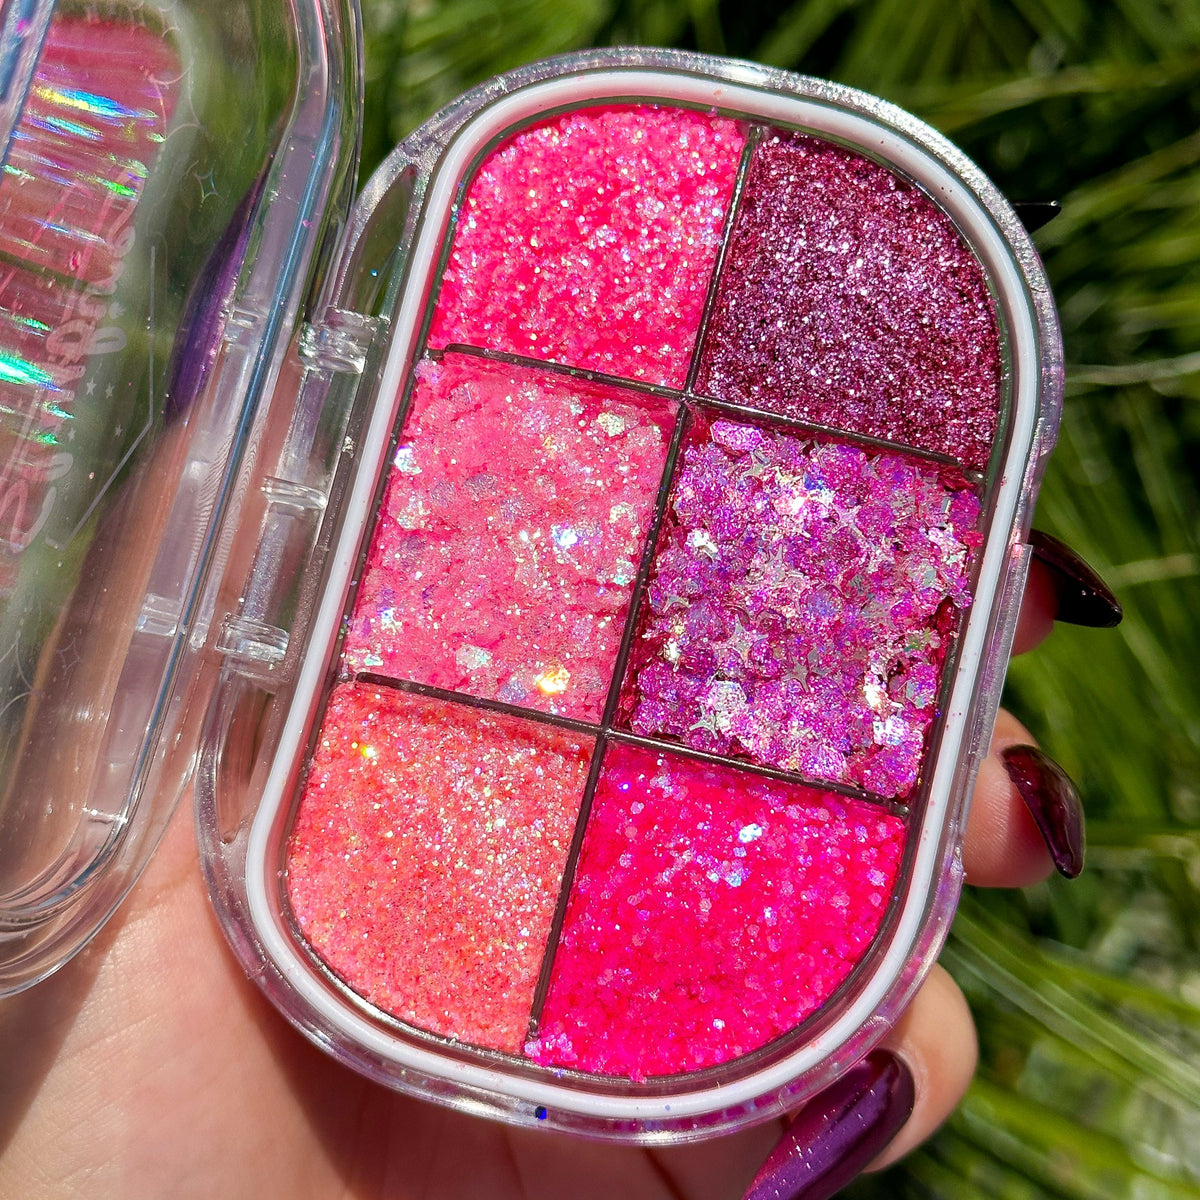 Unique Colors Sparklite Baby Pink S-221 Fine Dry Glitter